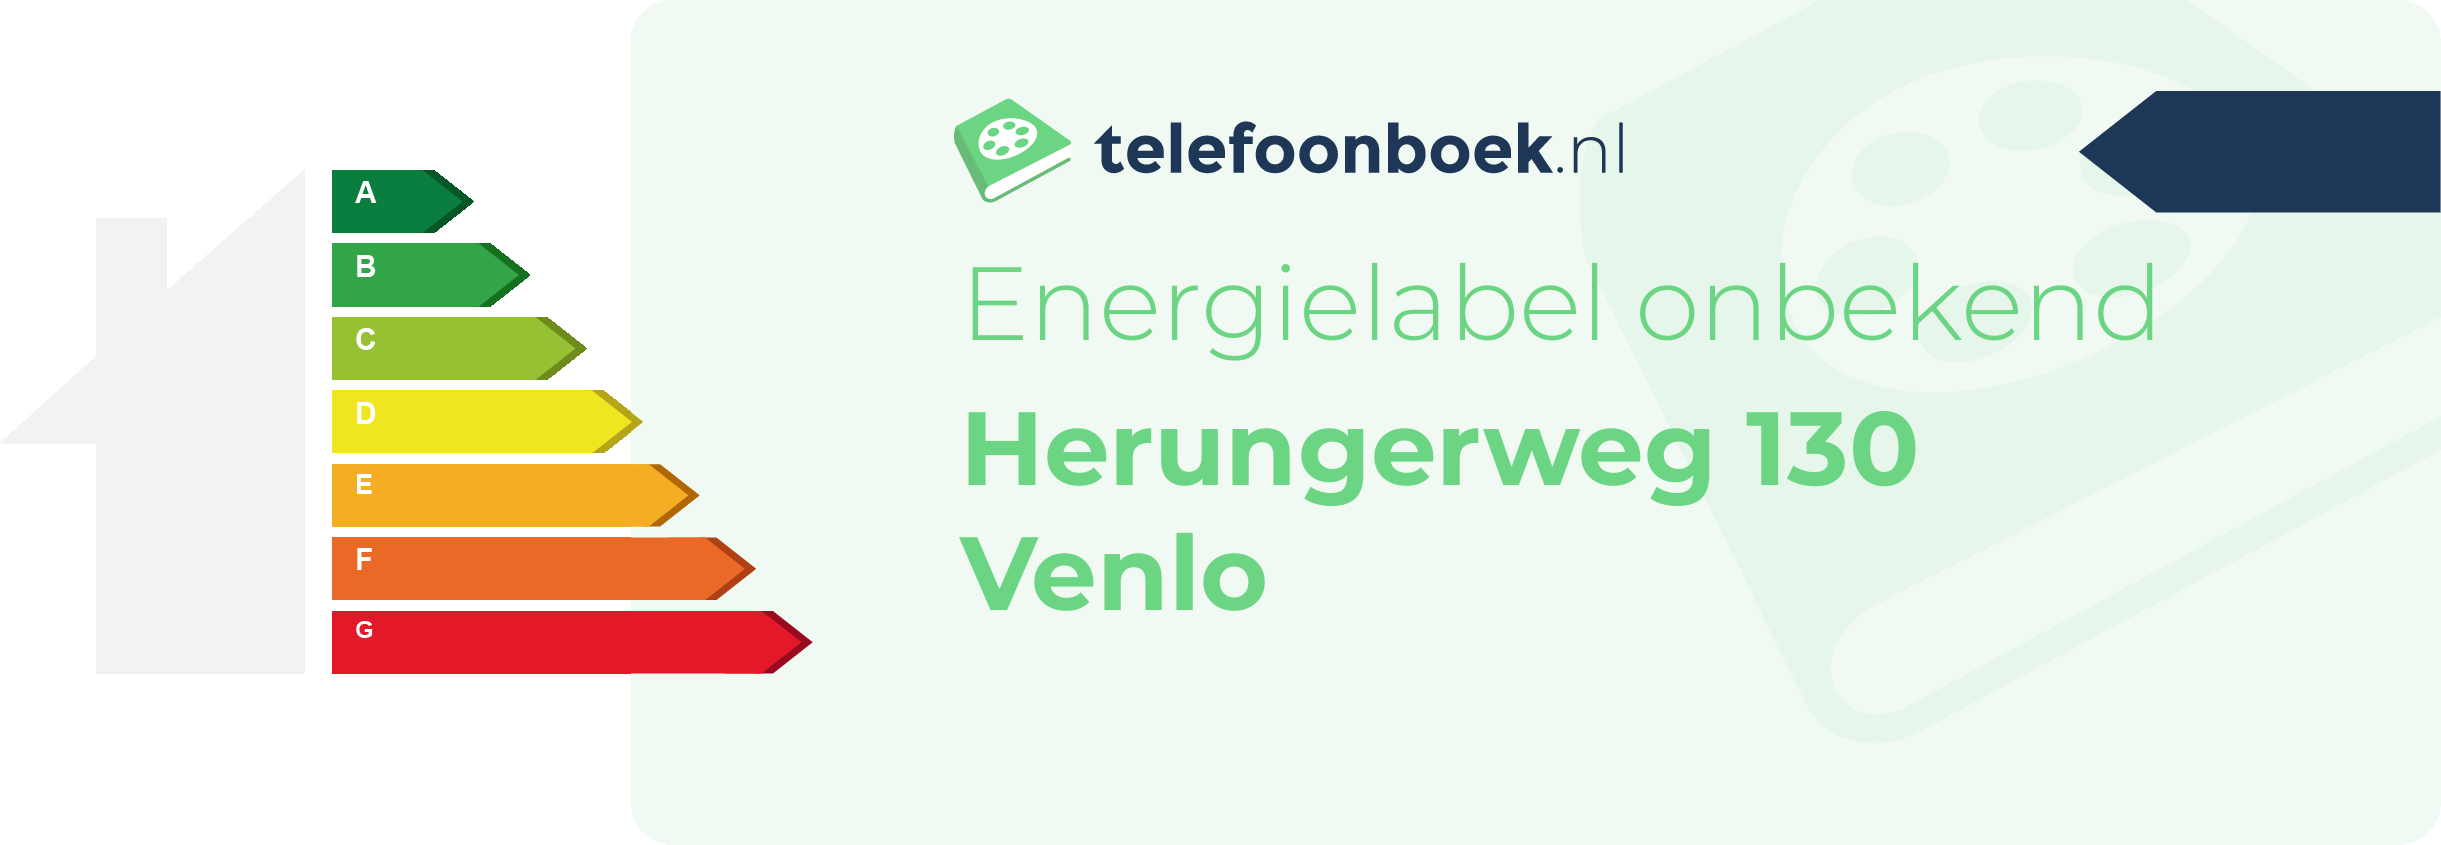 Energielabel Herungerweg 130 Venlo